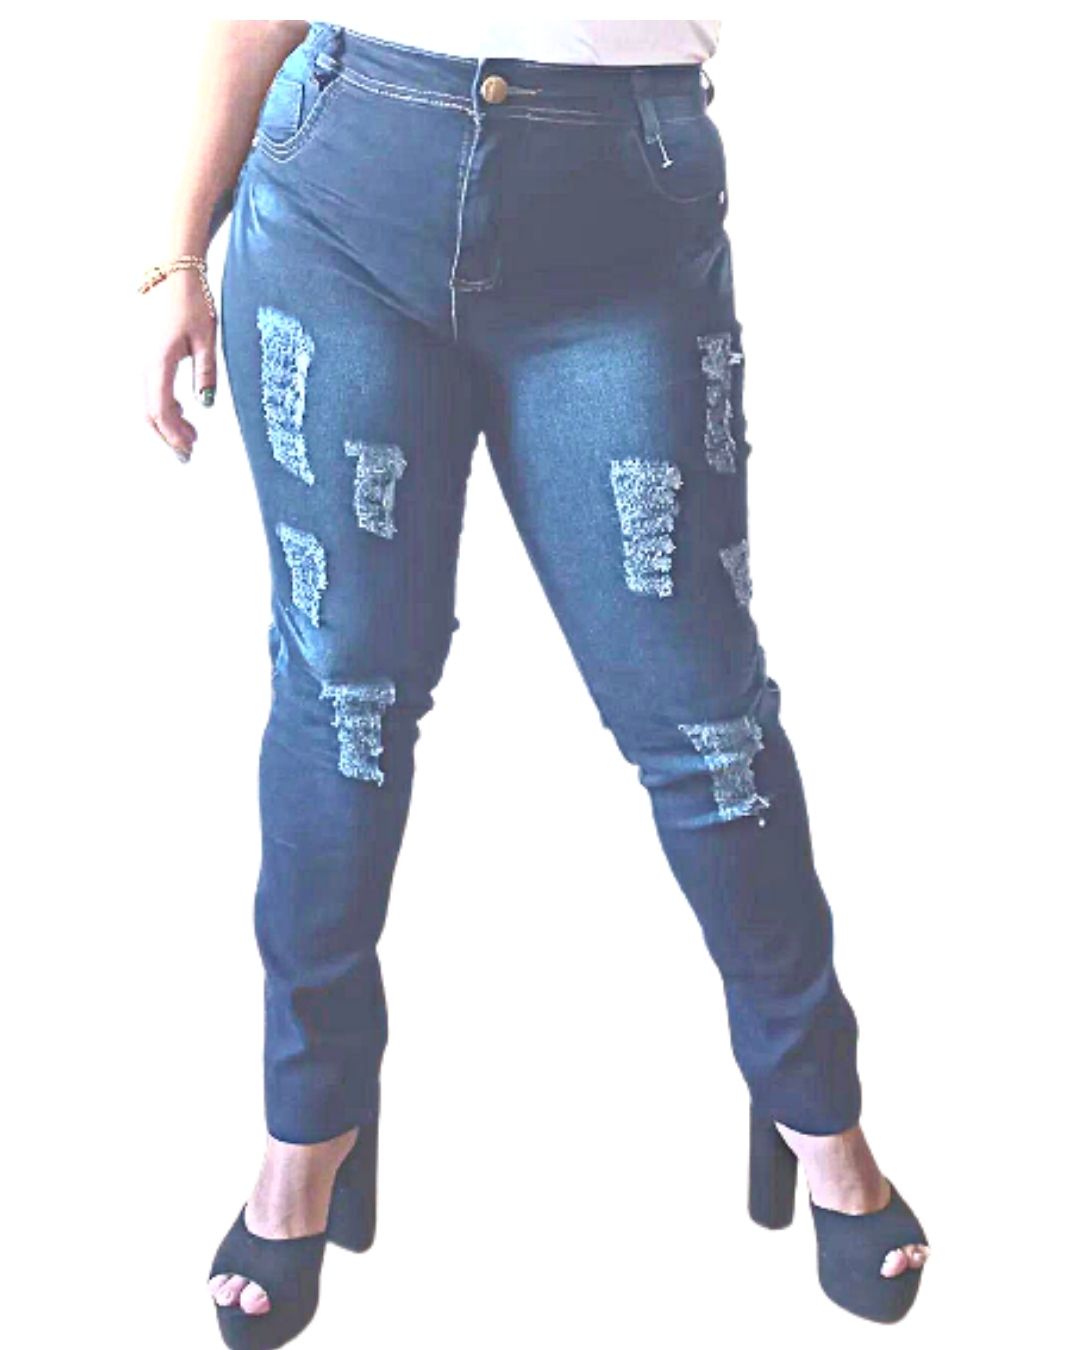 Calça jeans feminina destroyed escura cintura media